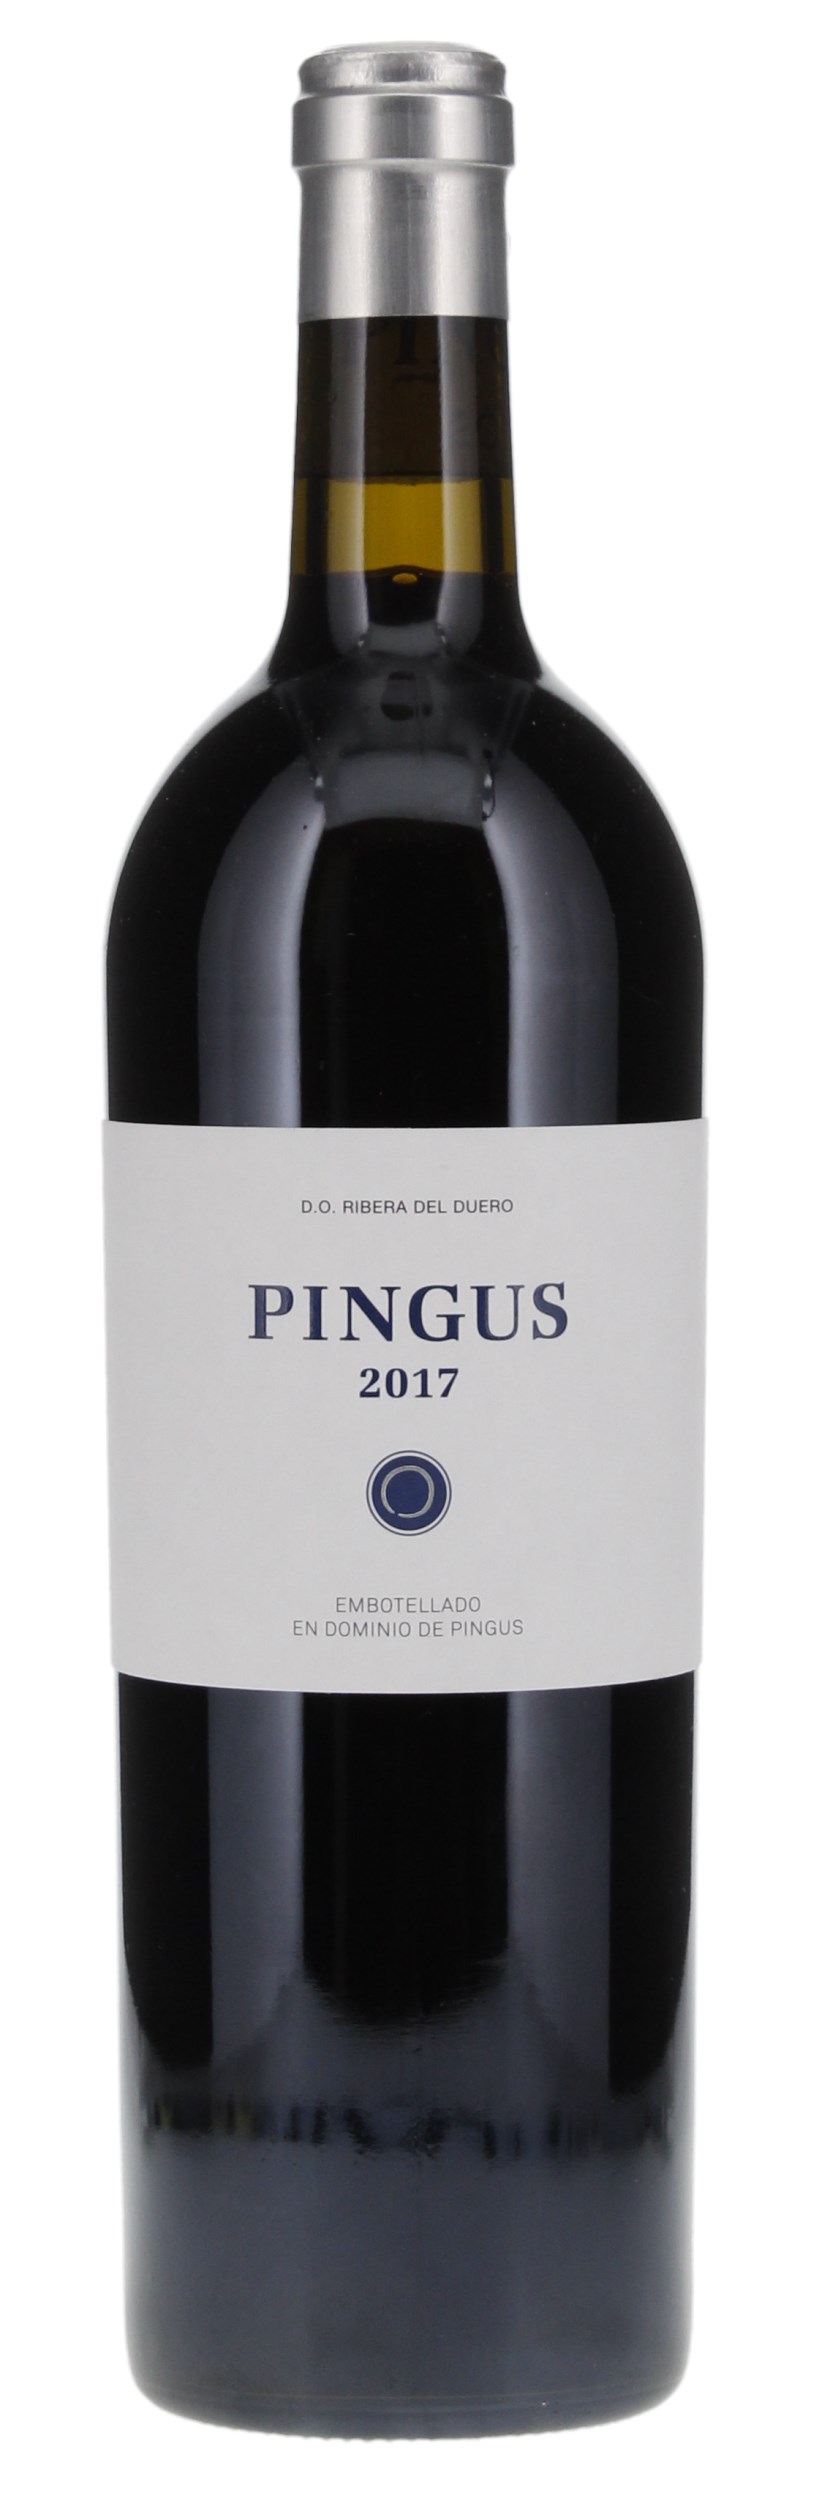 2017 Dominio de Pingus "Pingus", 750ml